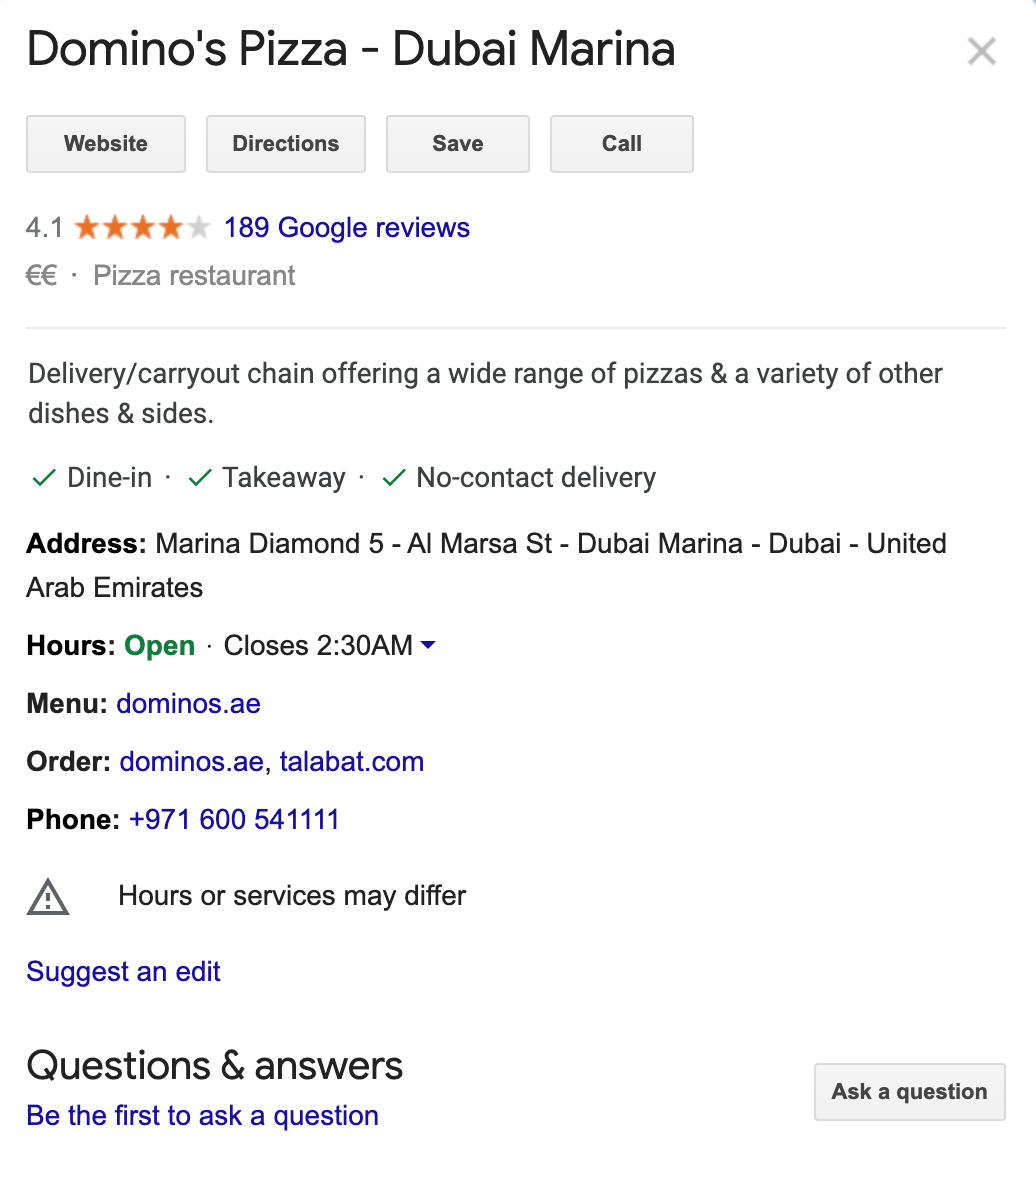 Secondary URLs of Dominoes store in Dubai